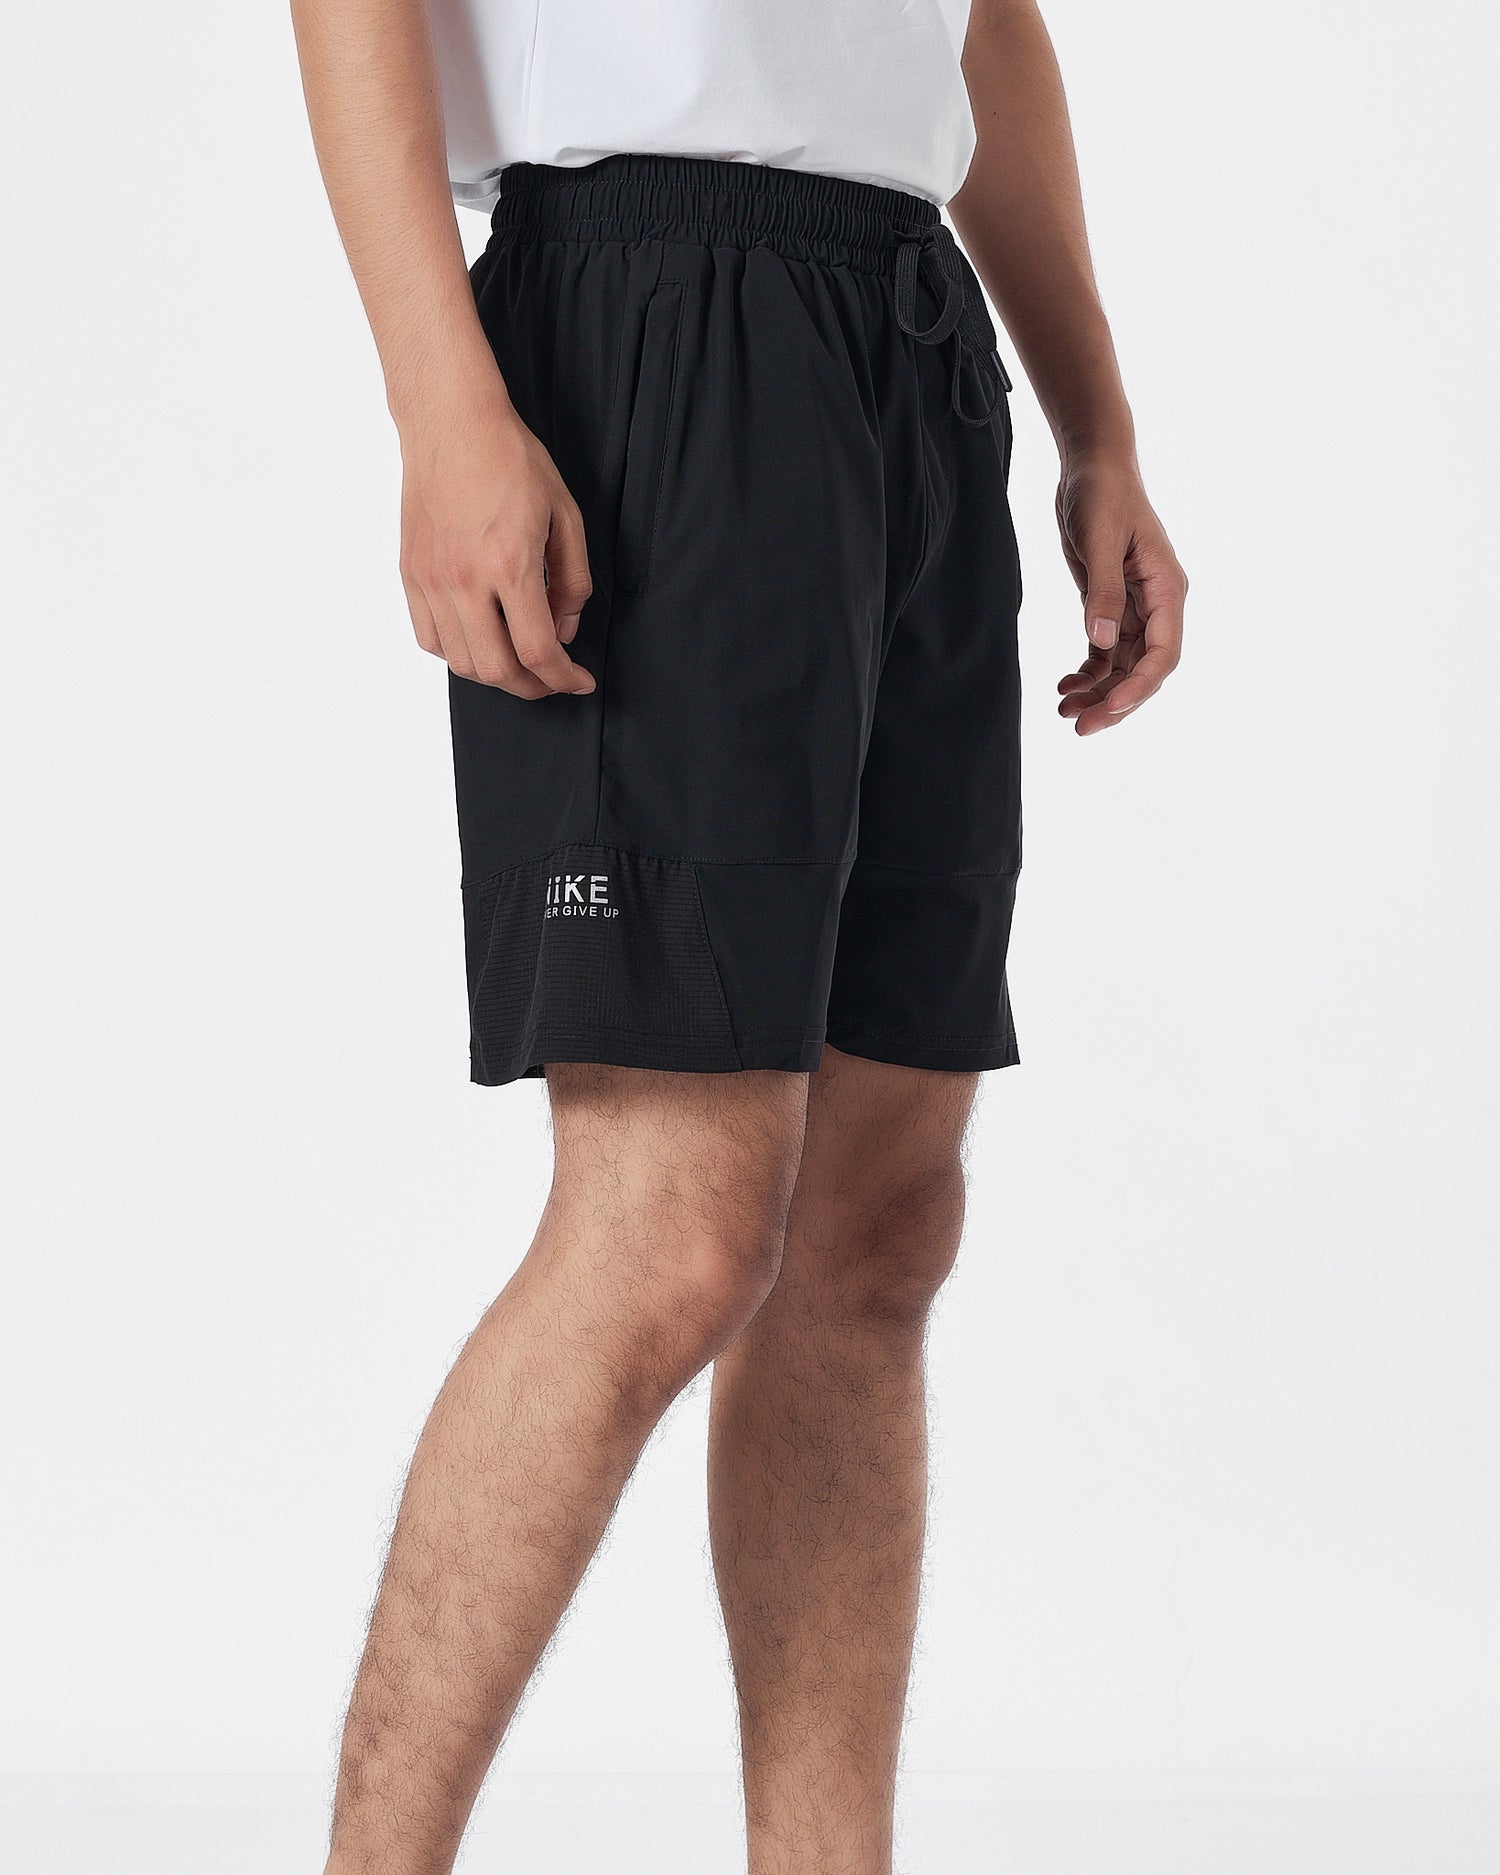 NIK Logo Printed Men Black Track Shorts 12.90